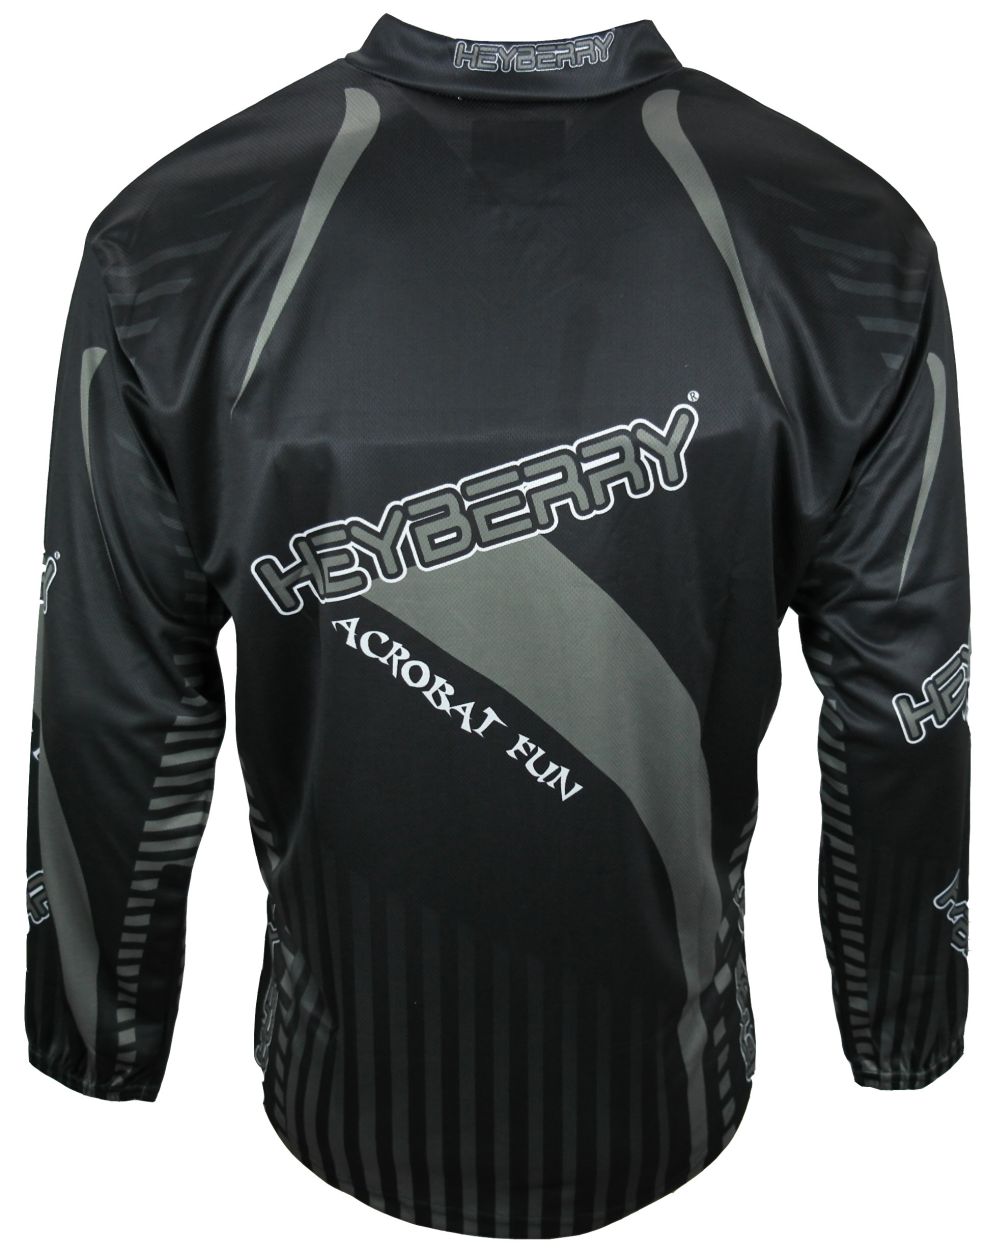 Heyberry Motocross MX Shirt Jersey schwarz grau Größe M L XL XXL